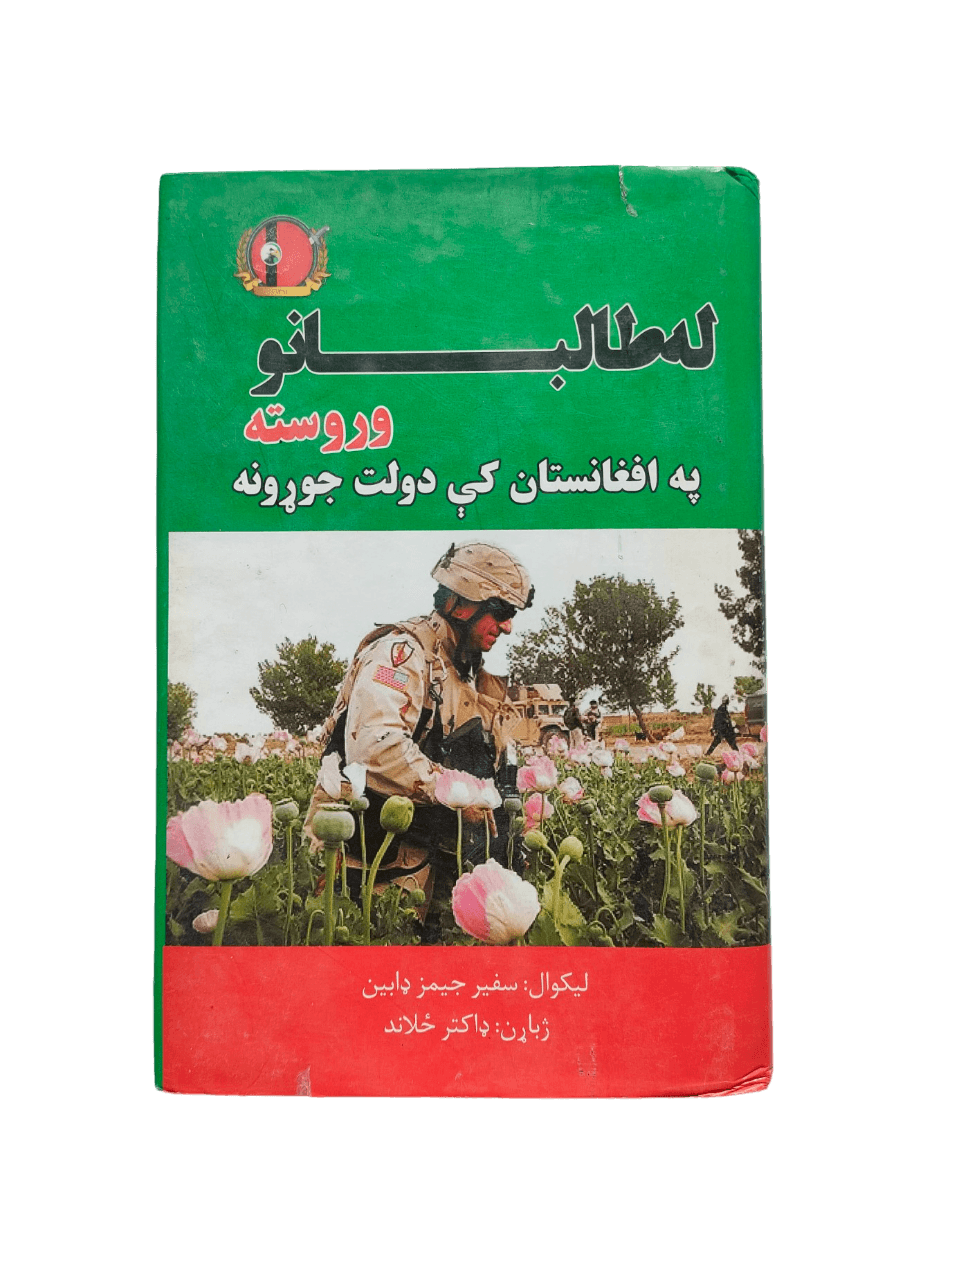 La Talibanu Warusta Pa Afghanistan ki Daulat (After Taliban, Wealth Creation in Afghanistan) - KHAJISTAN™